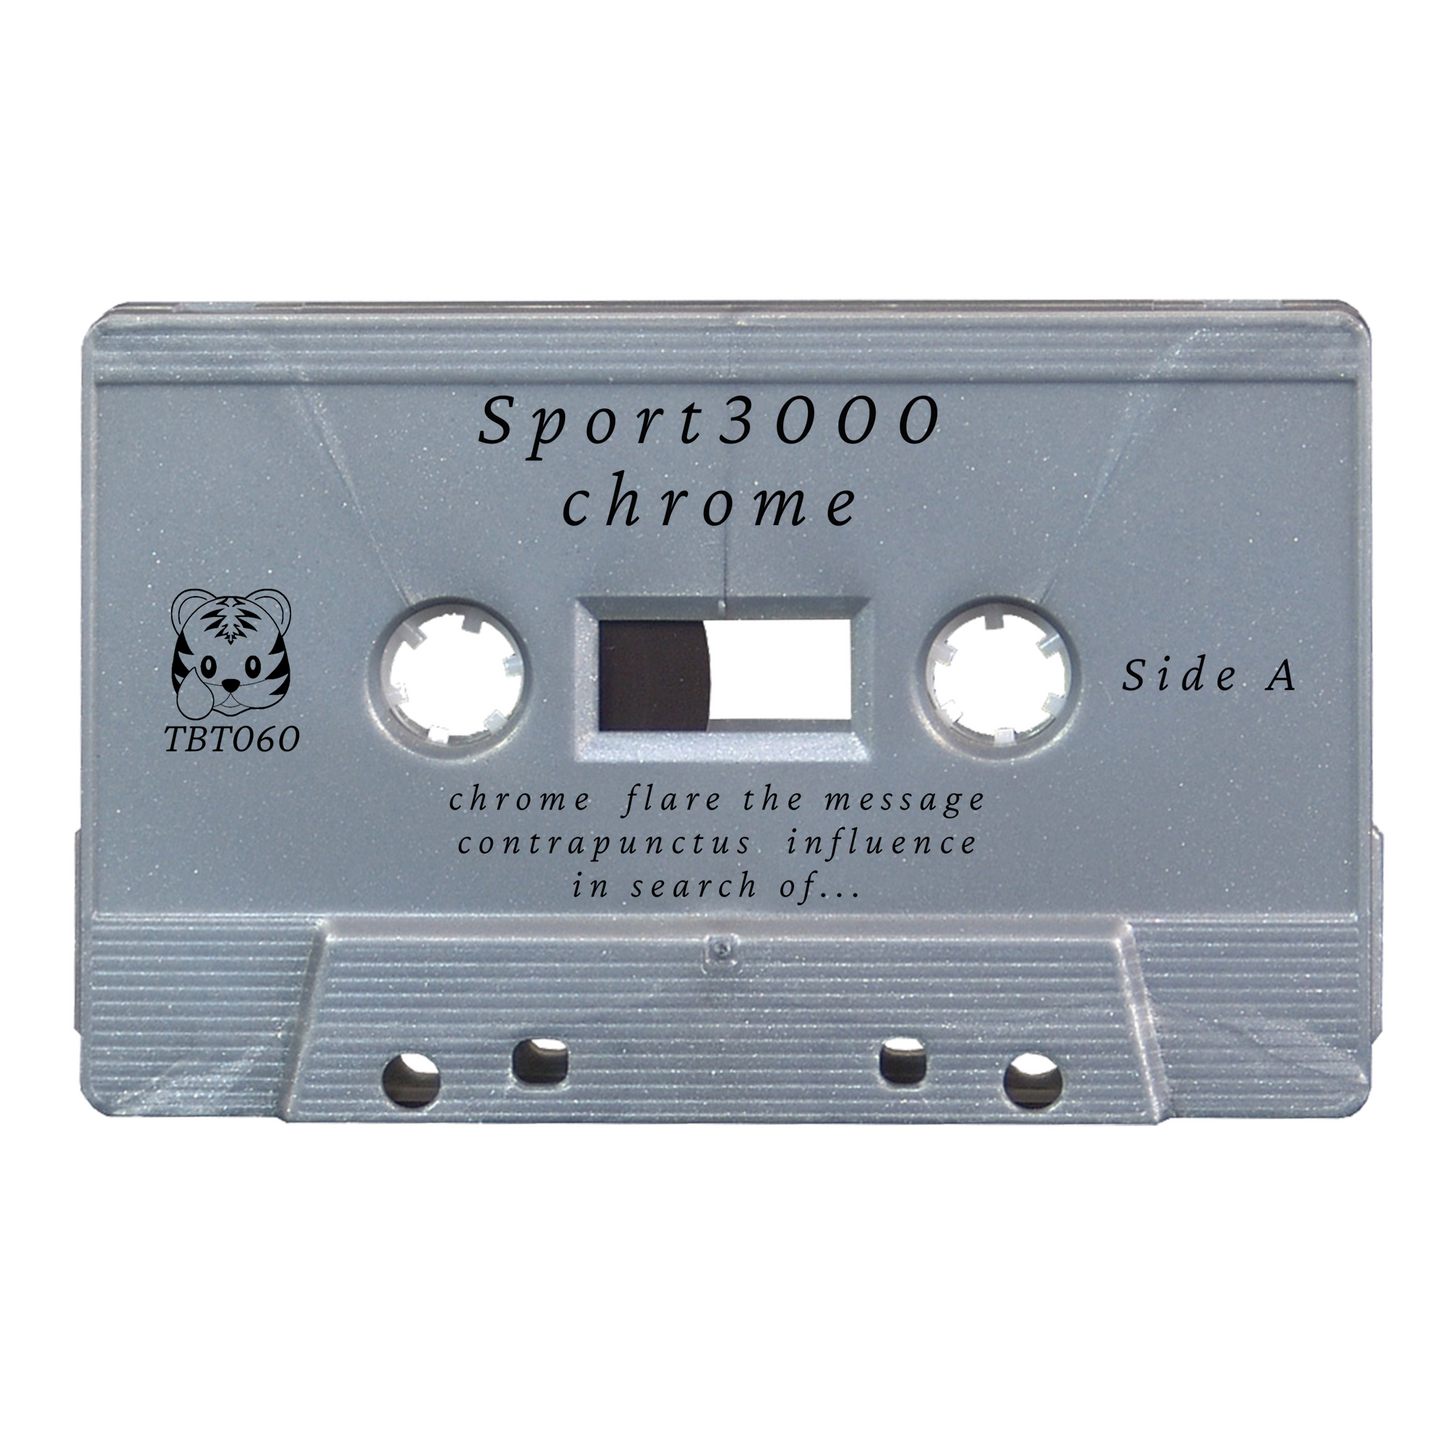 Ｓｐｏｒｔ３０００ - "Chrome" Limited Edition Cassette Tape